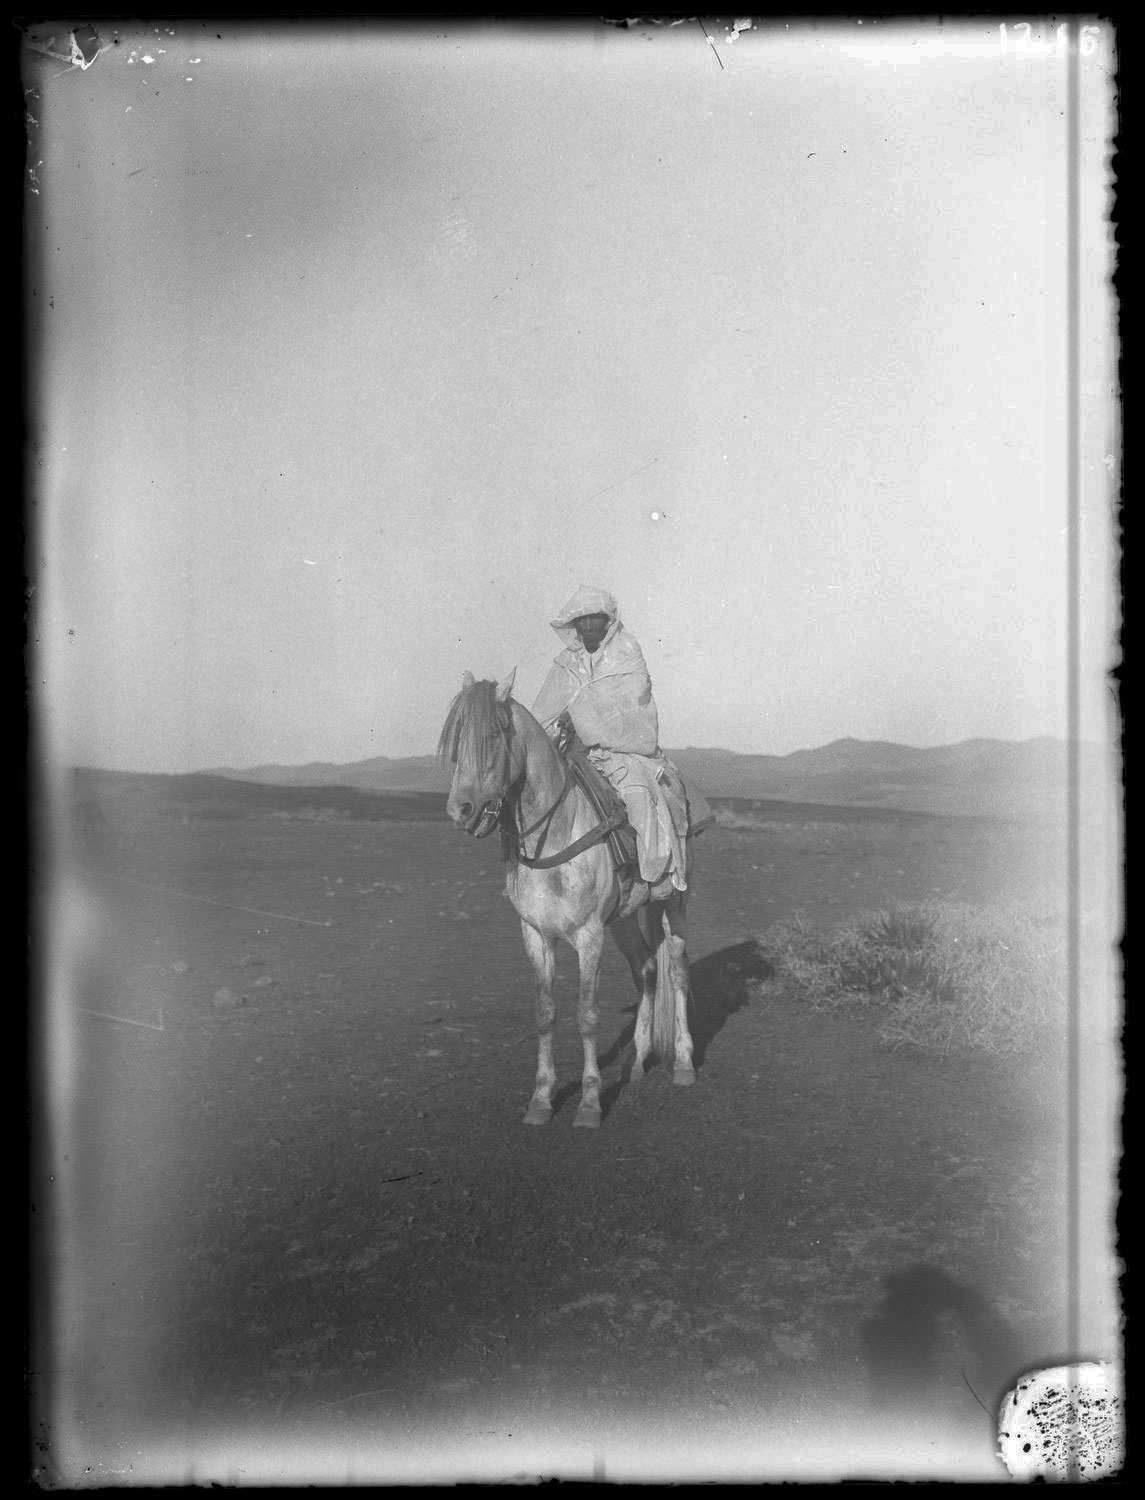 Moroccan man in djellaba on horse